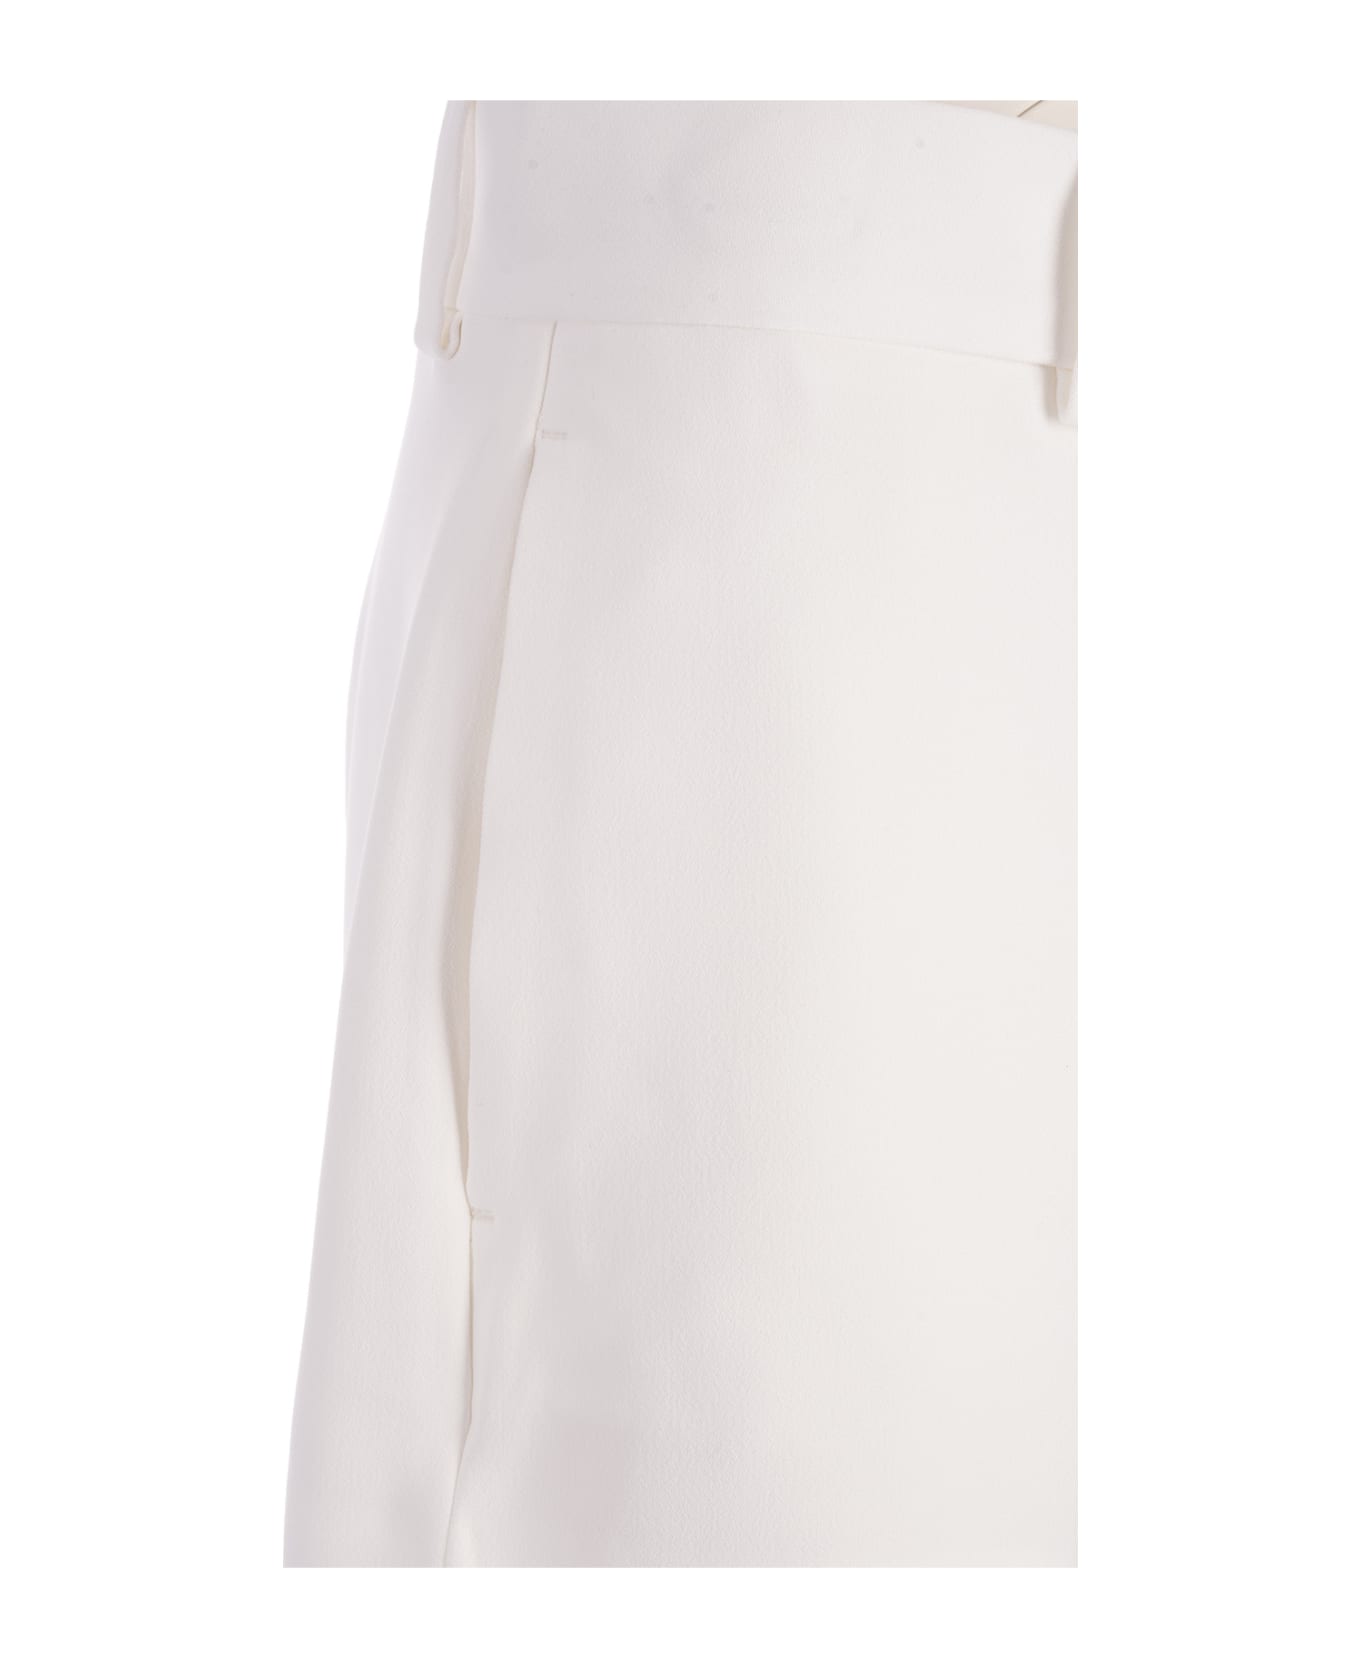 Ermanno Scervino White Tailored Shorts - White